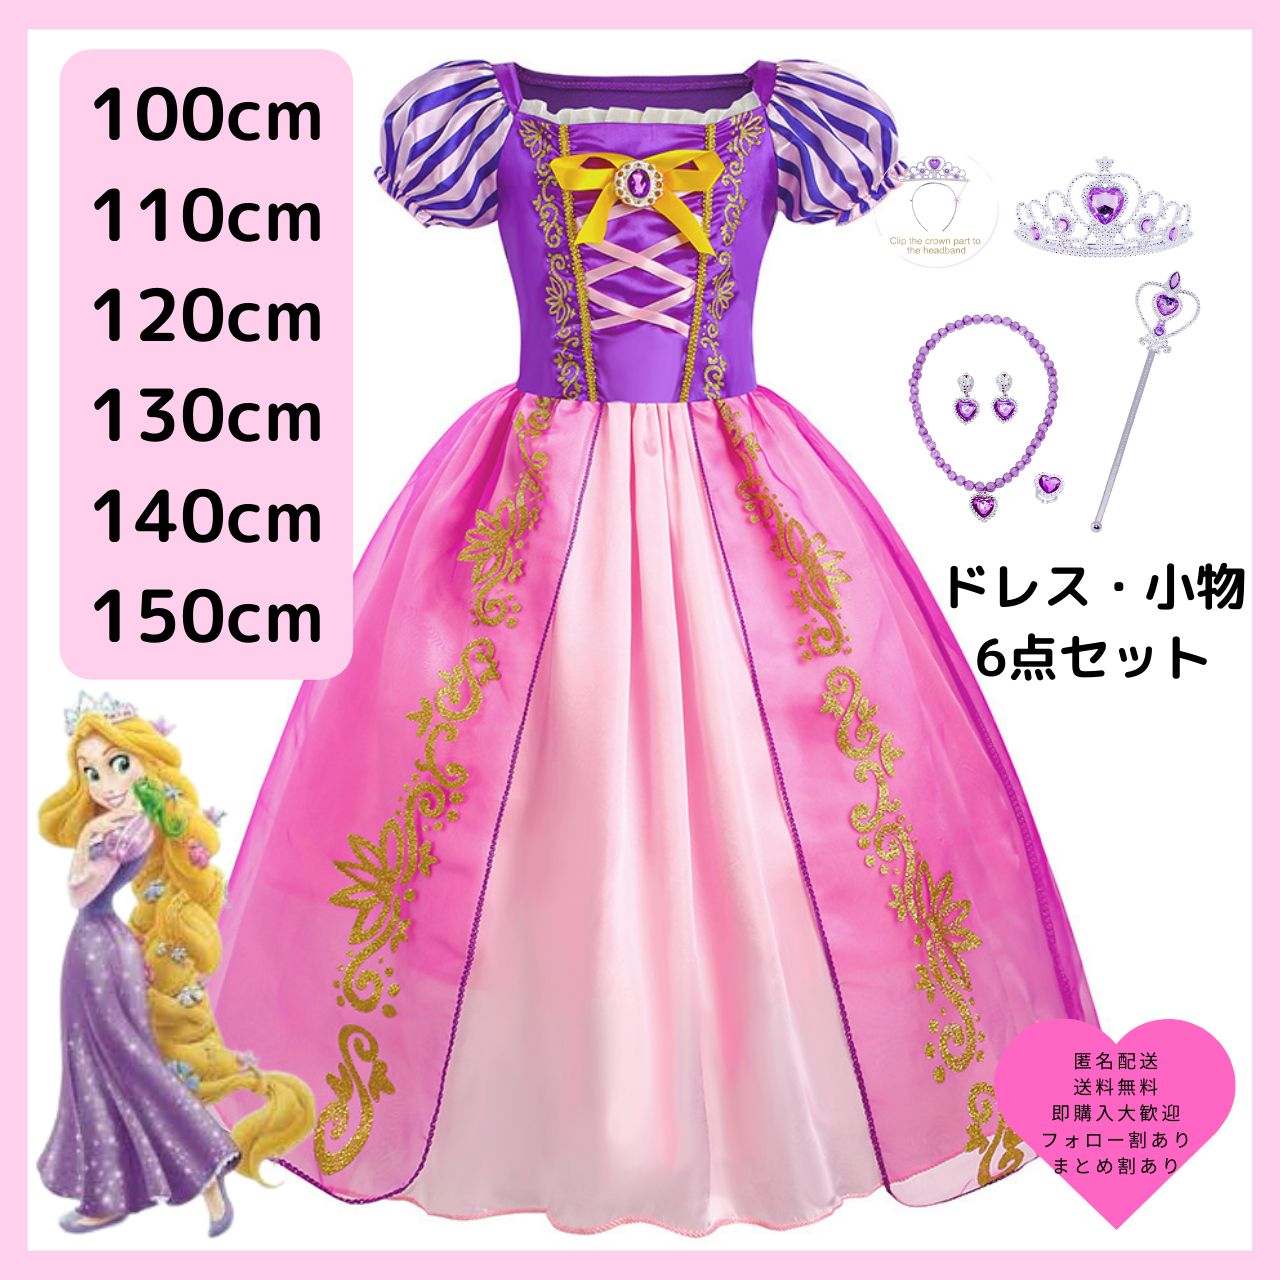 130cm】ディズニー ラプンツェル風ドレス プリンセス コスプレ 